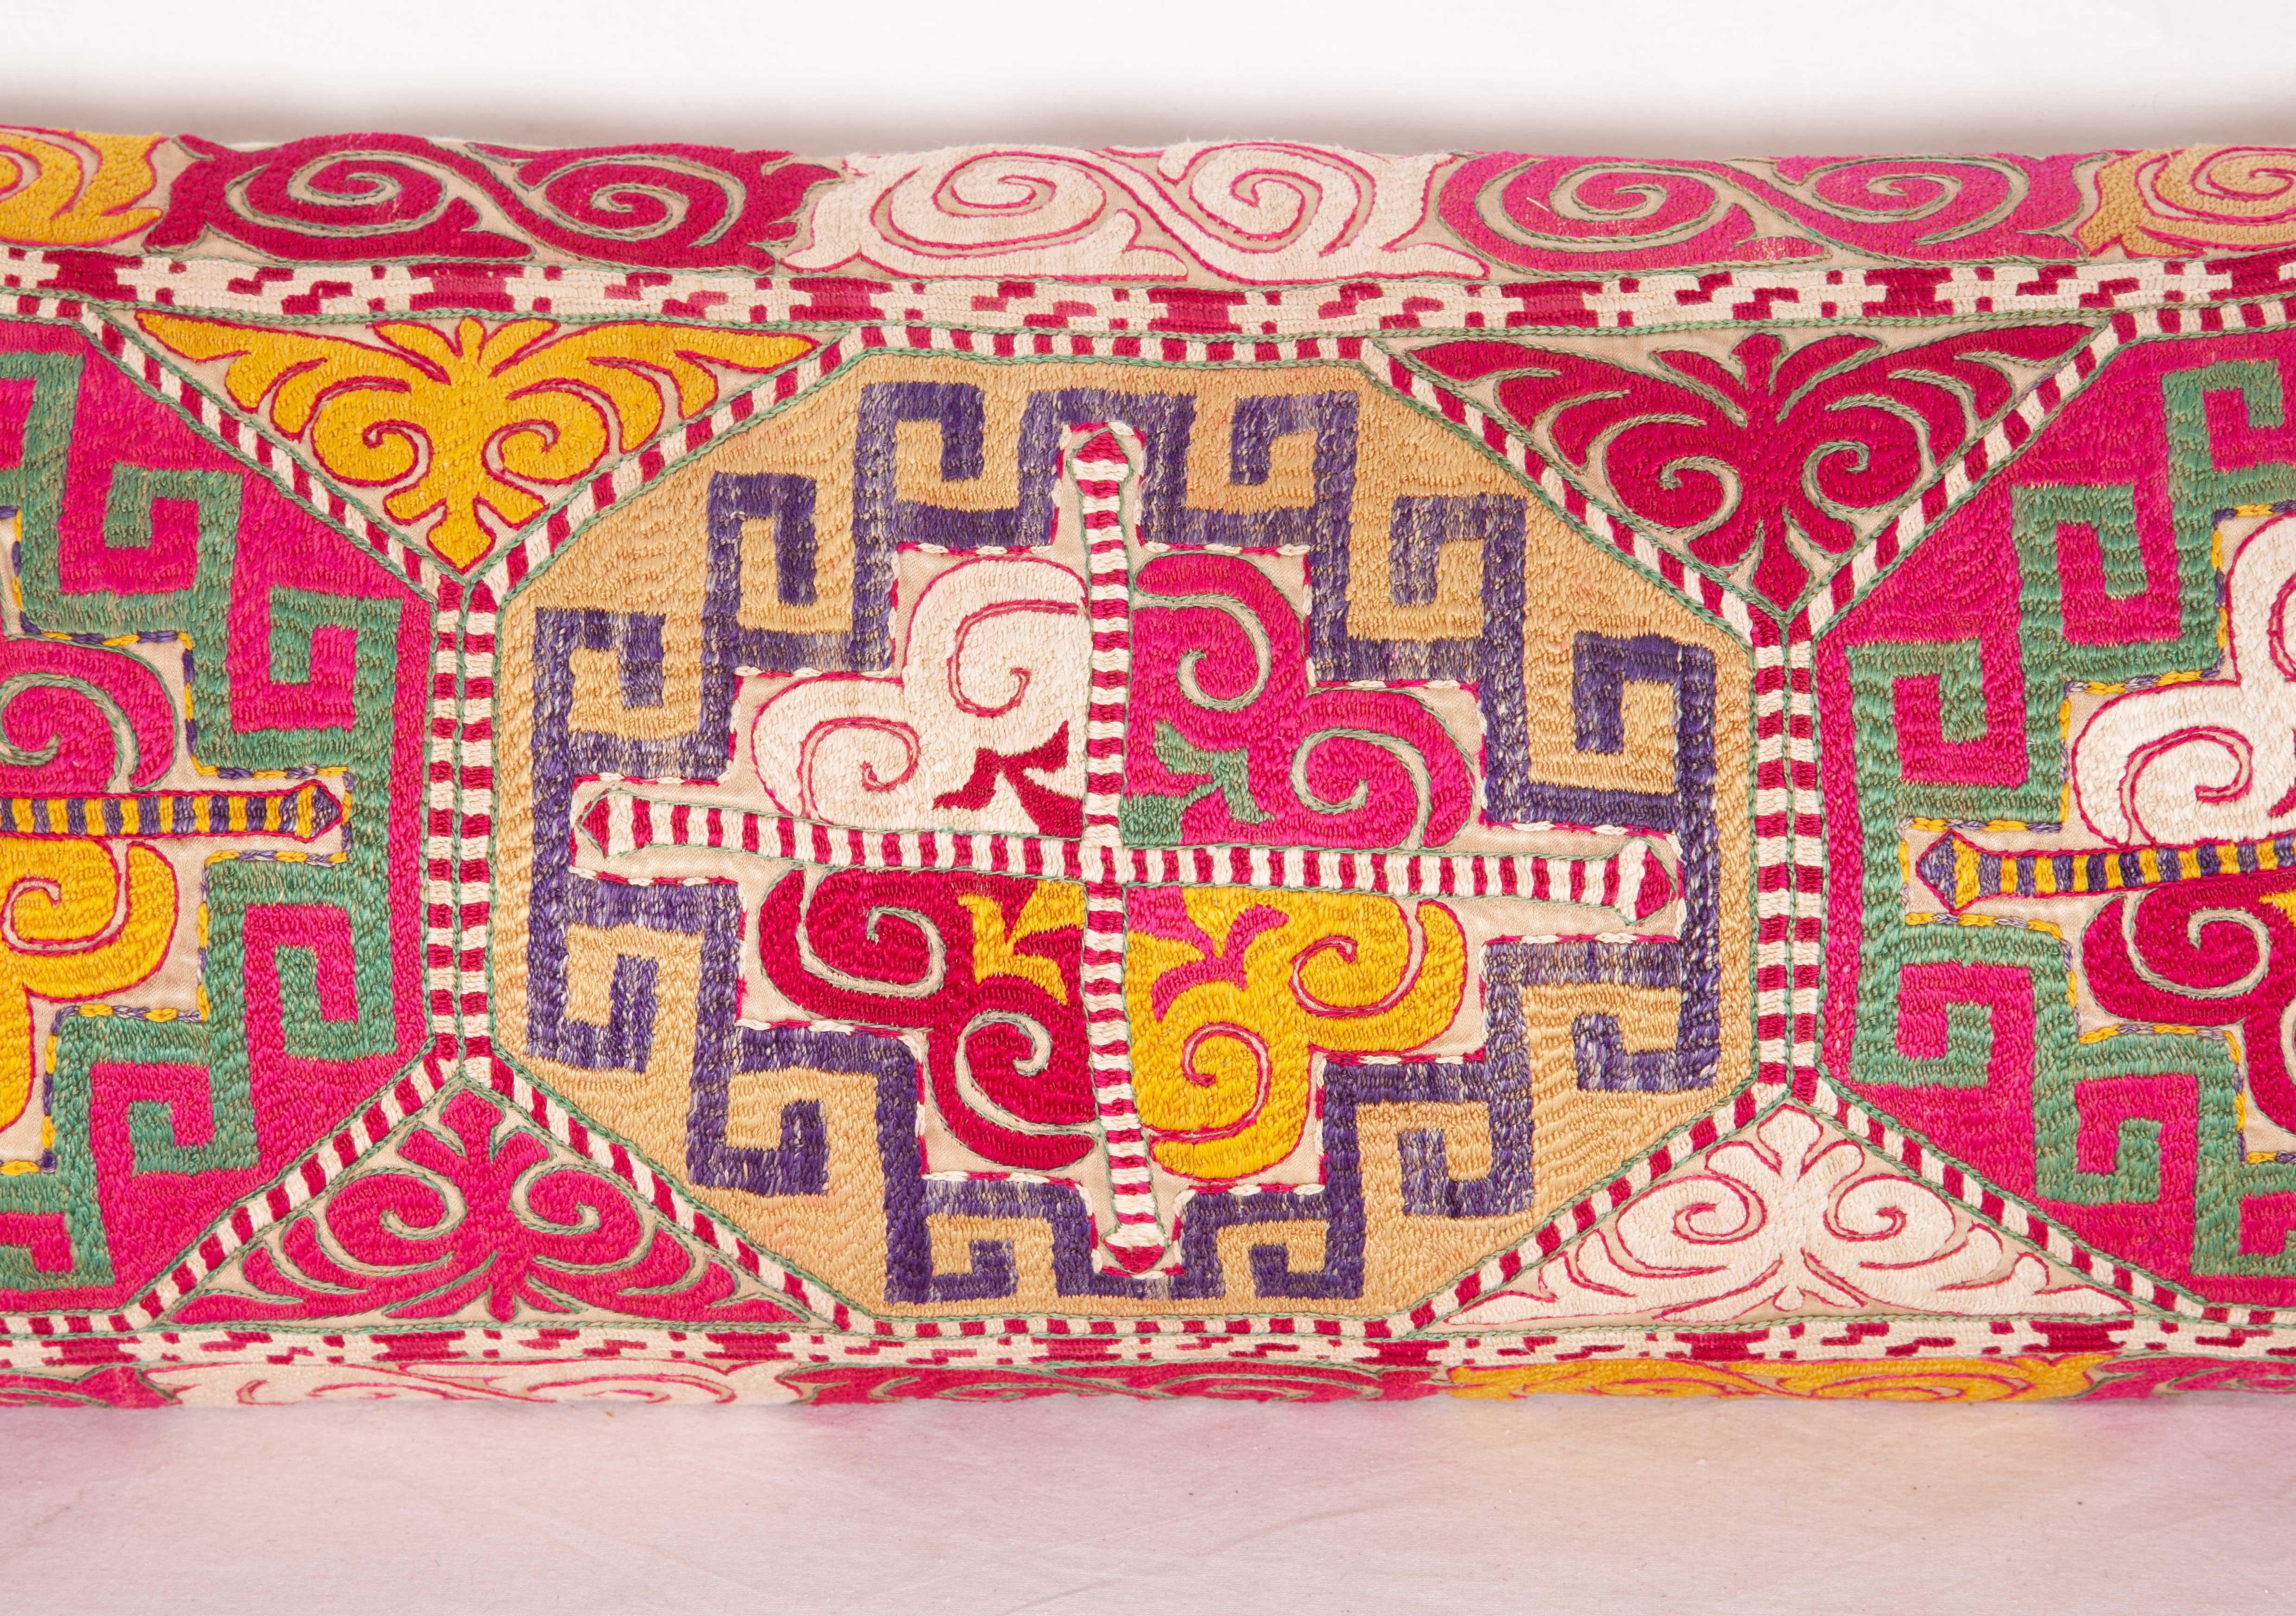 Suzani Lumbar Pillow Case Fashioned from an Uzbek Embroidered Mafrash Panel